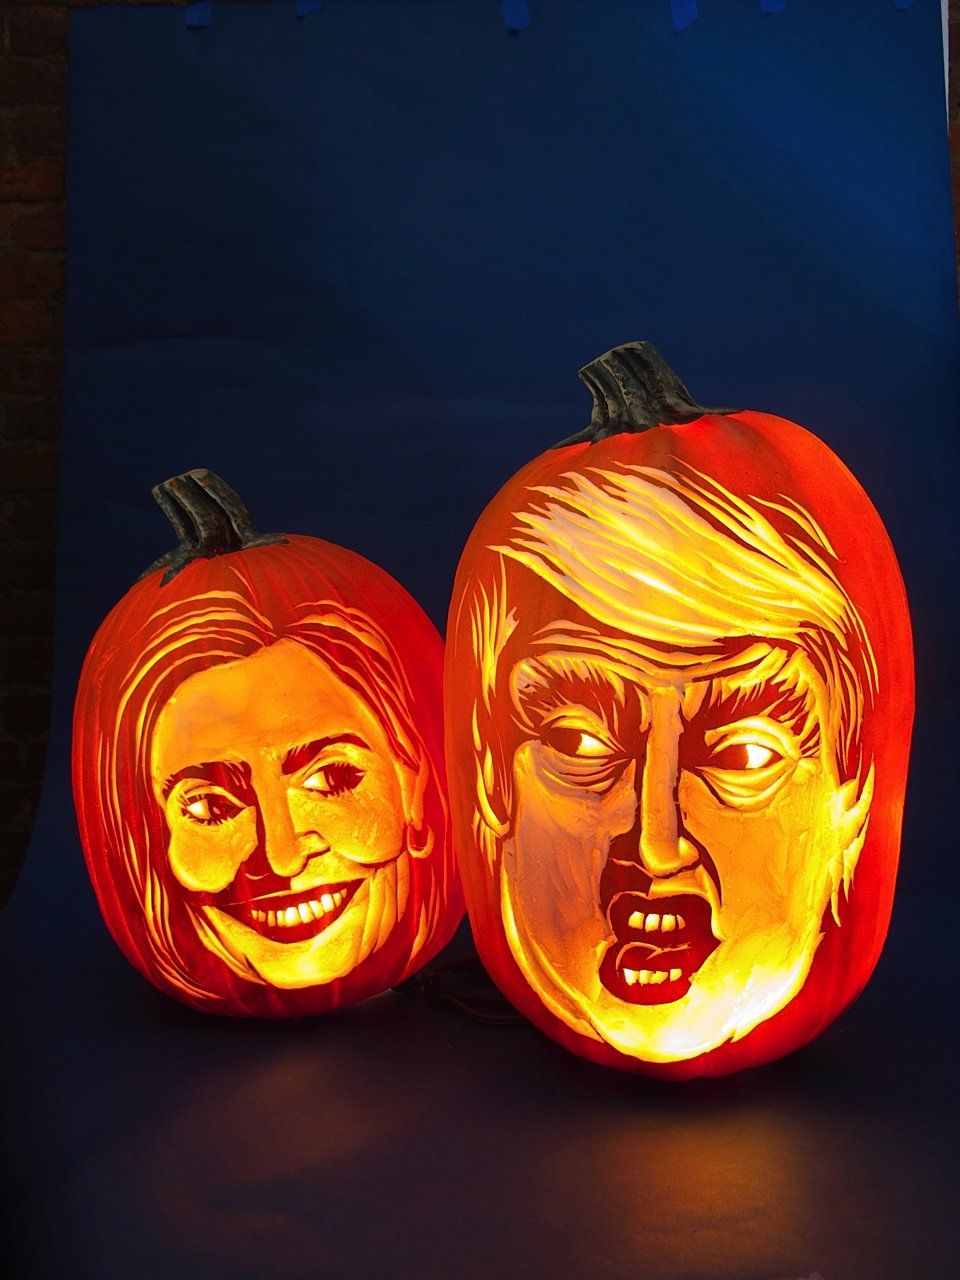 Hugh McMahon's pumpkin realisations of Hilary Clinton and Donald Trump